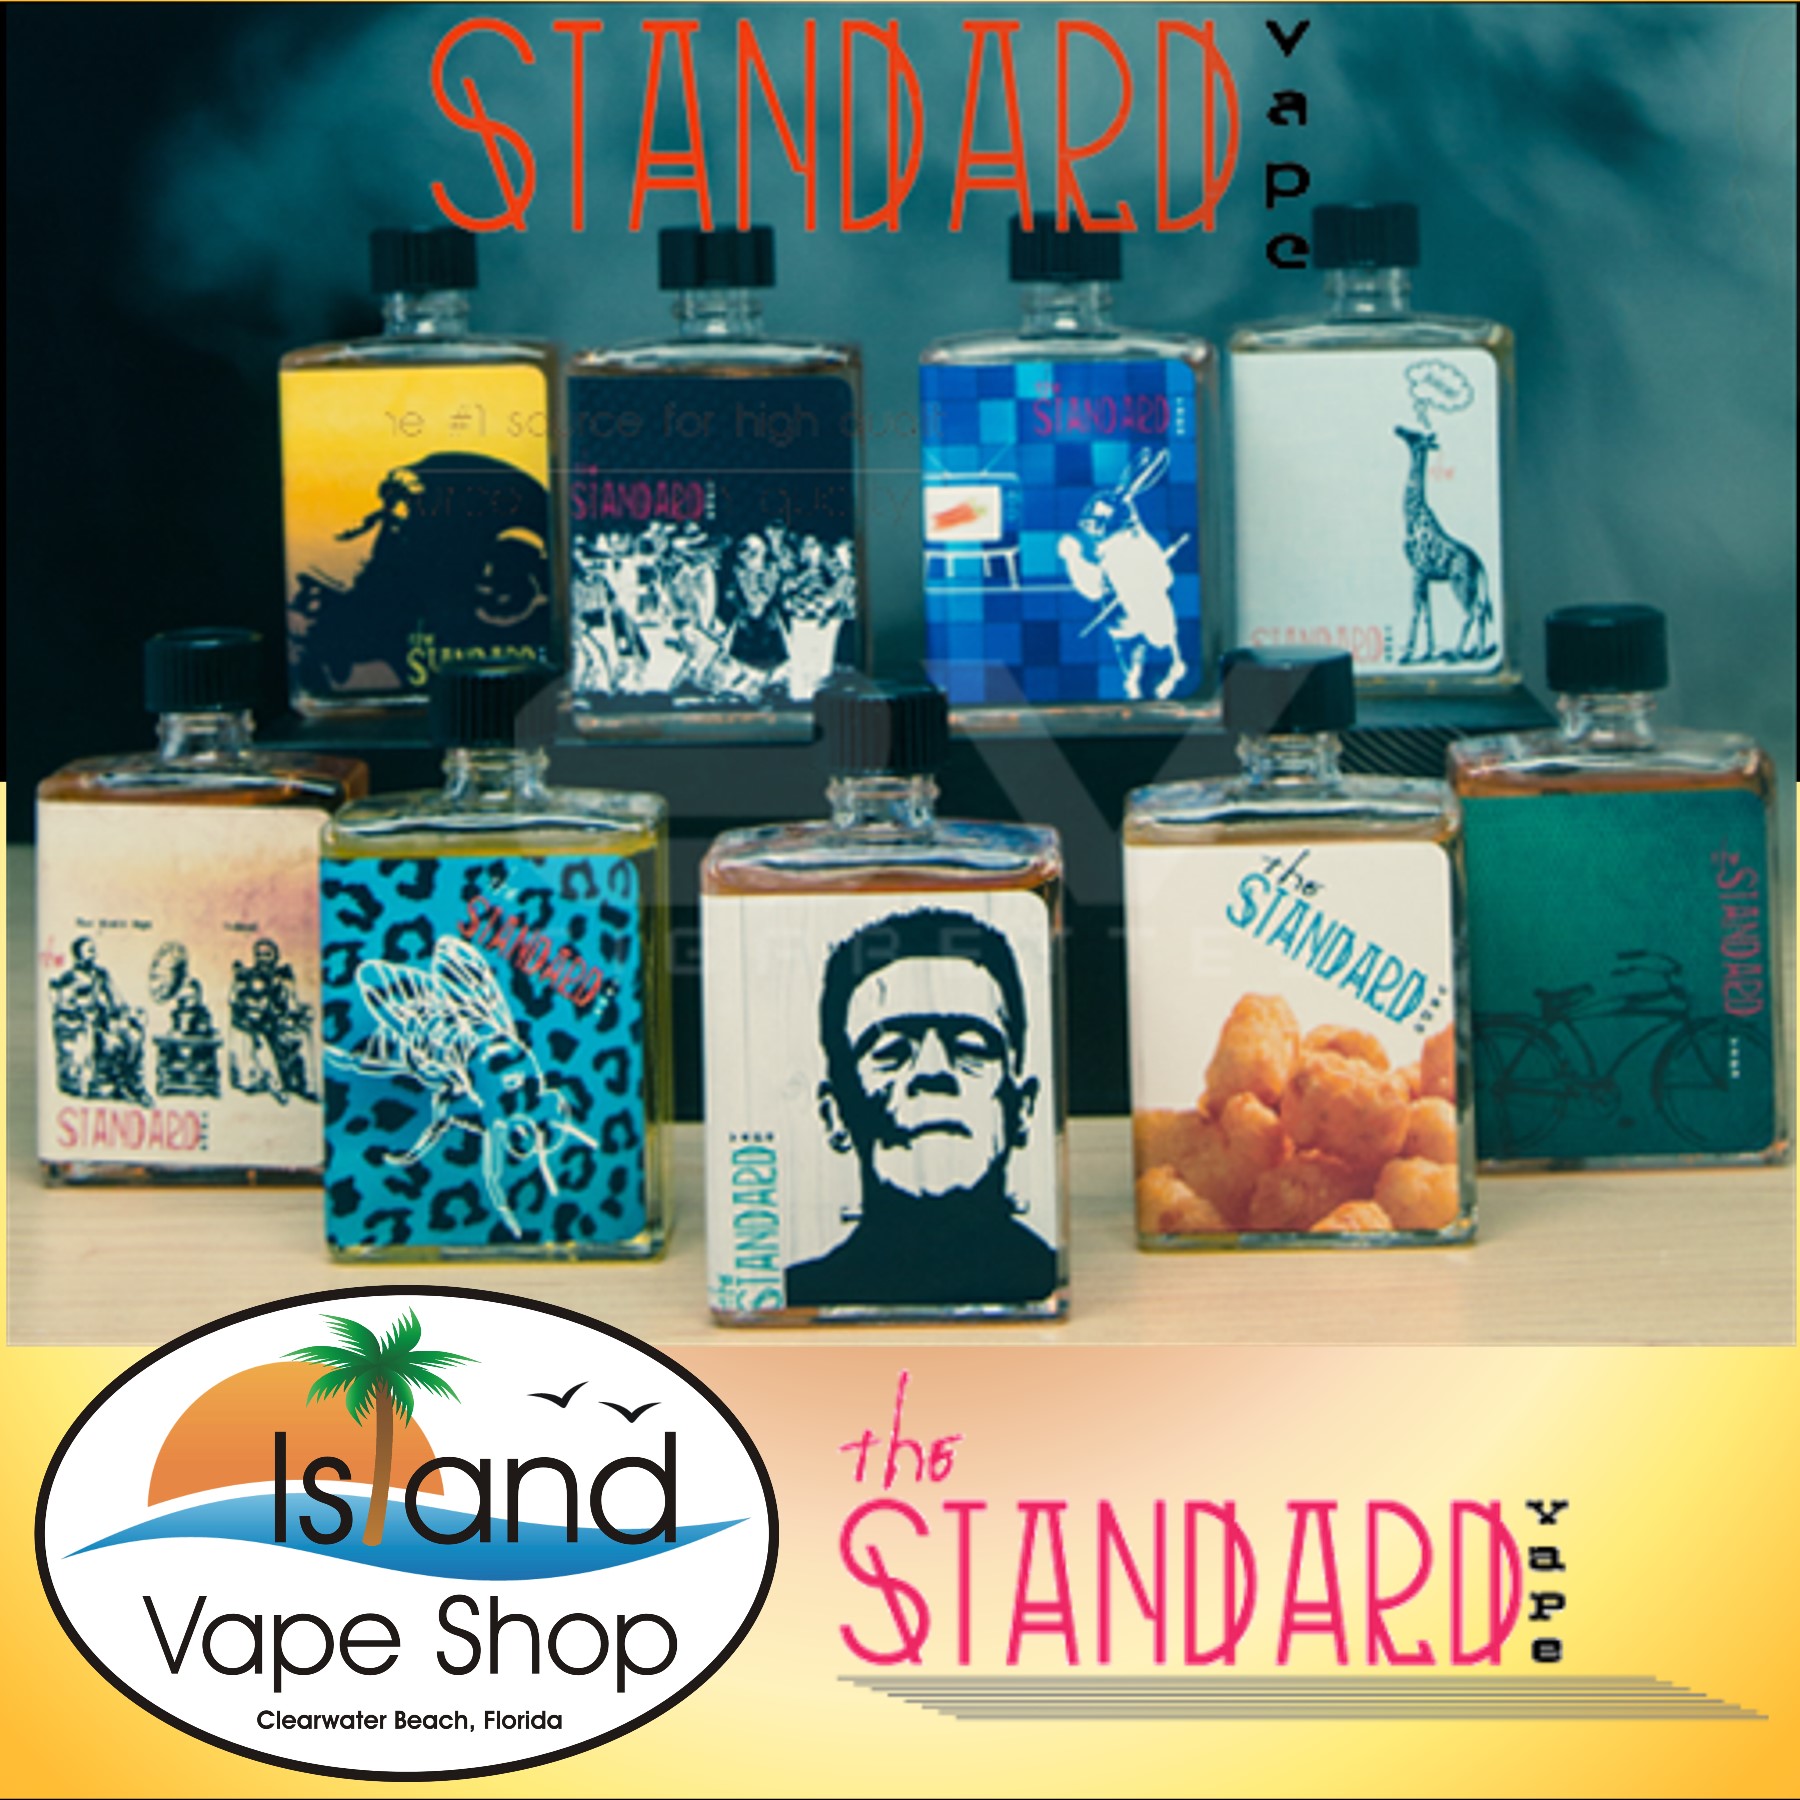 Island Vape Shop Photo